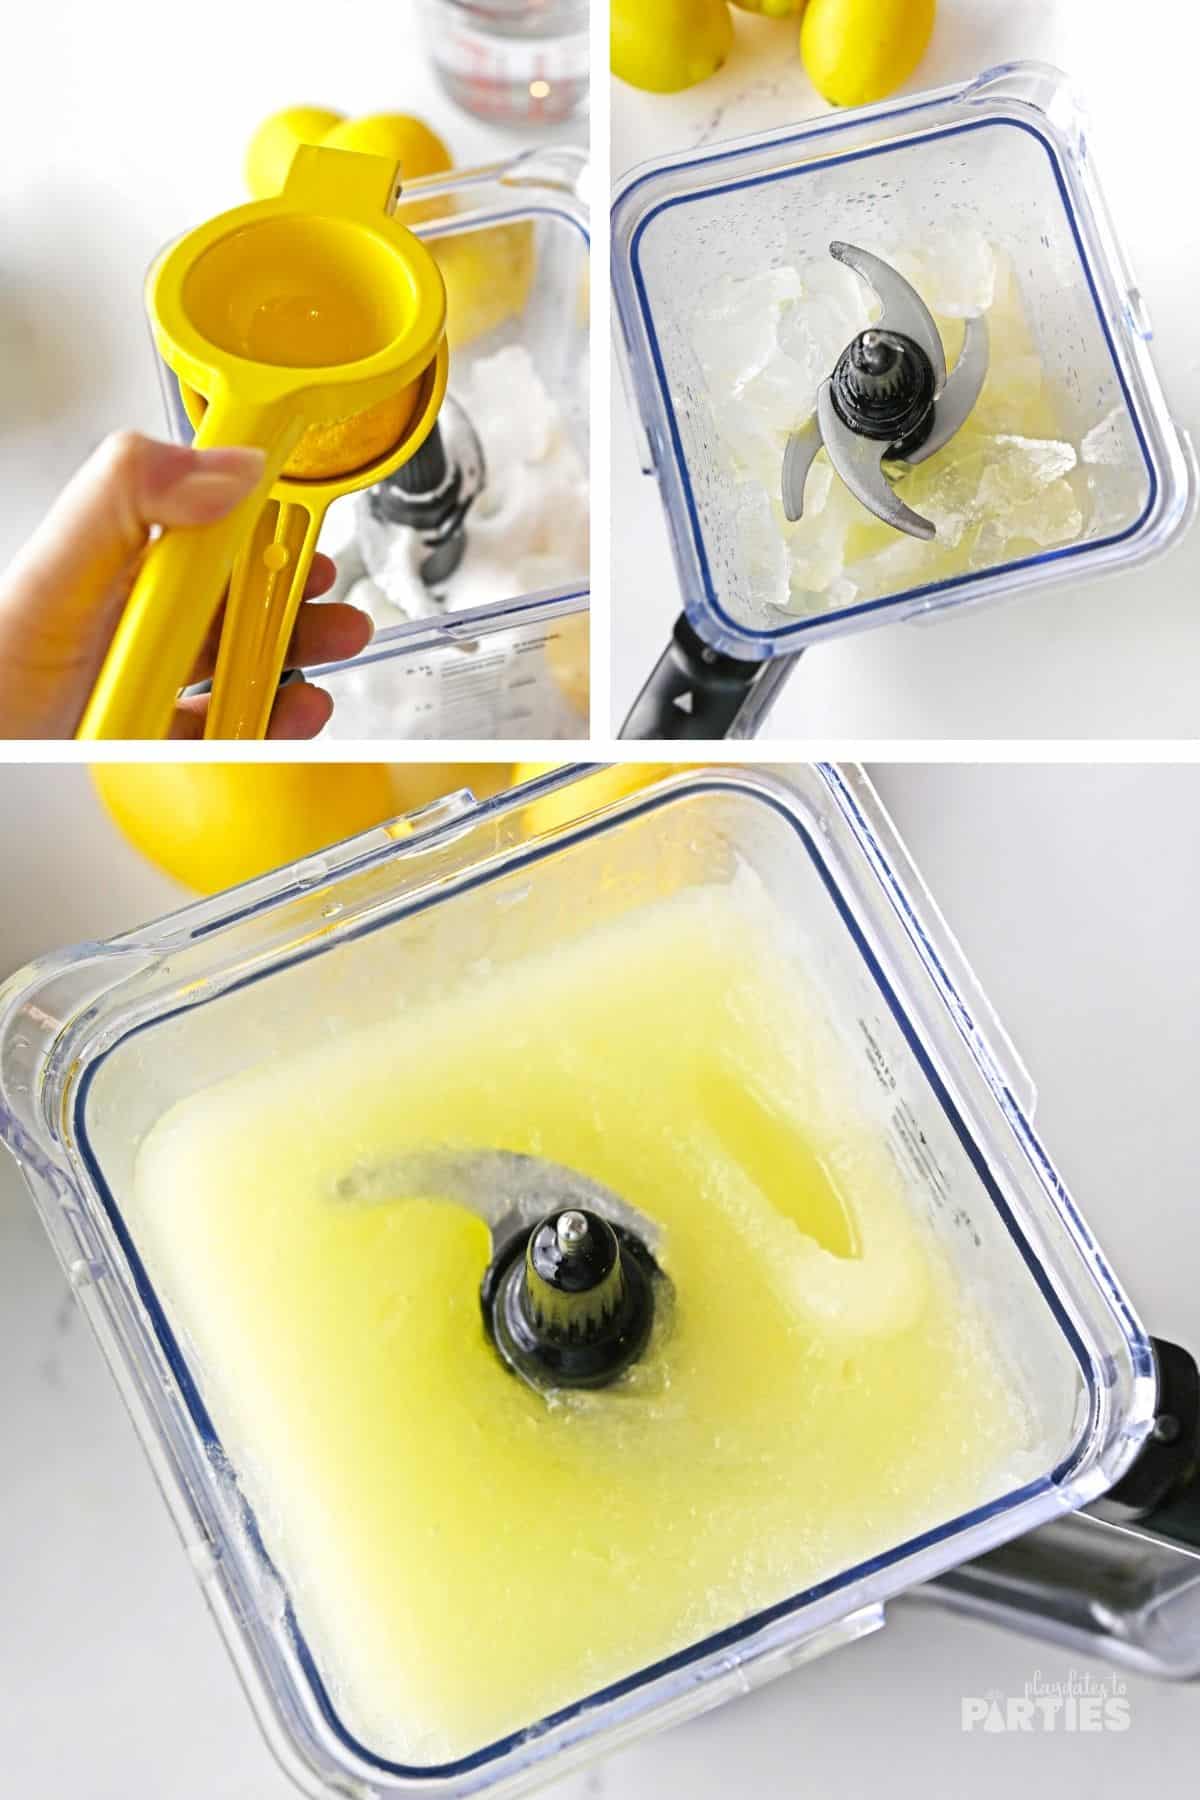 How to make lemonade slushies steps 1-3.